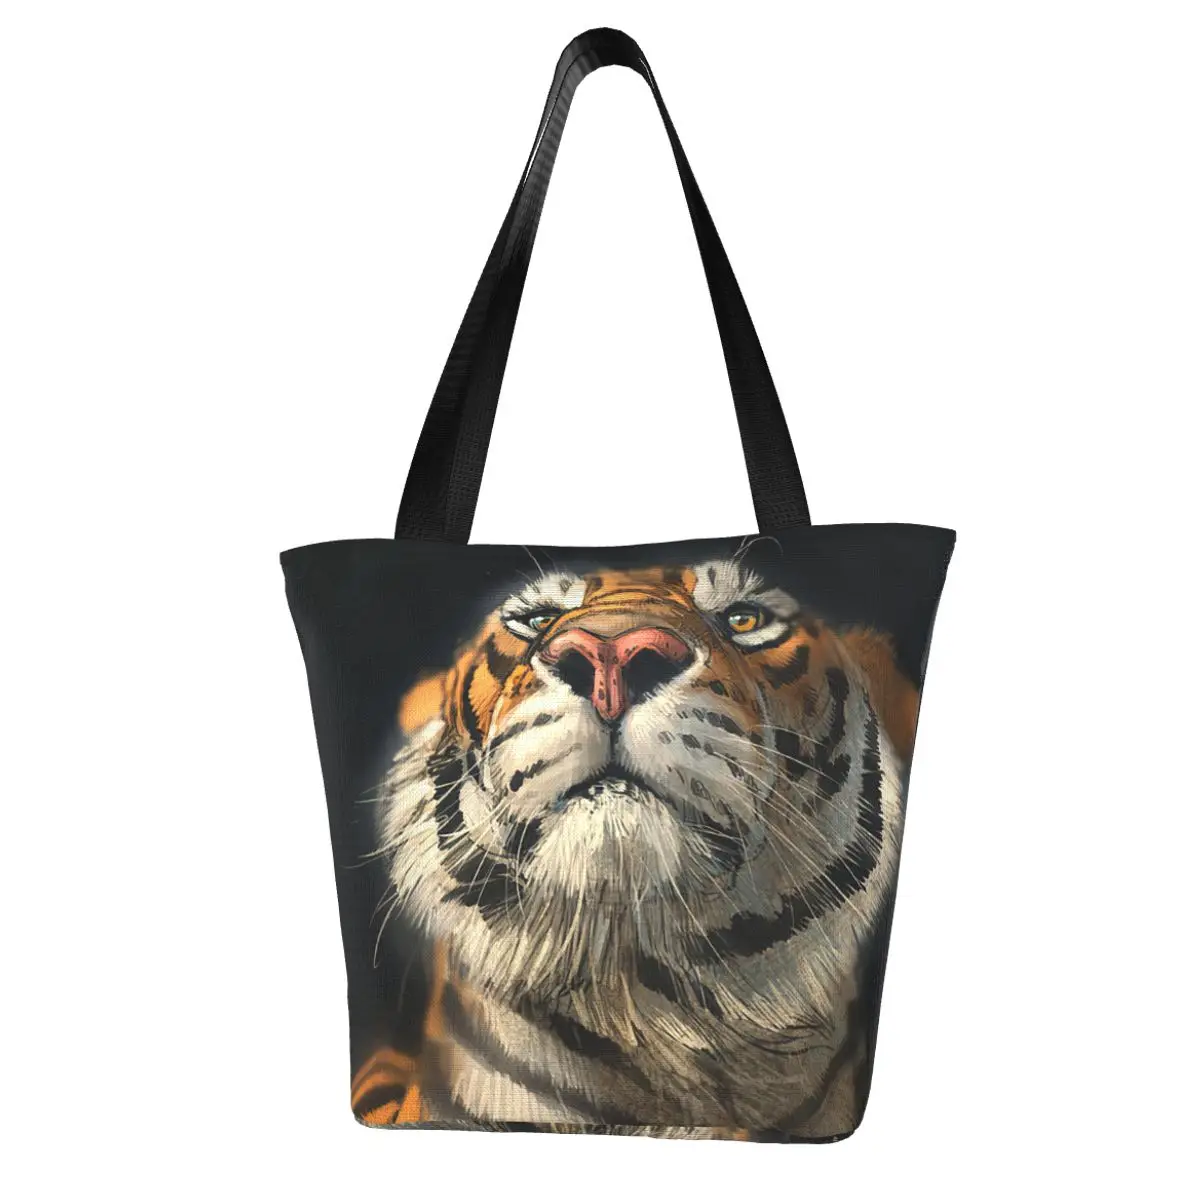 Tiger Shopping Bag Aesthetic Cloth Outdoor Handbag Female Fashion Bags